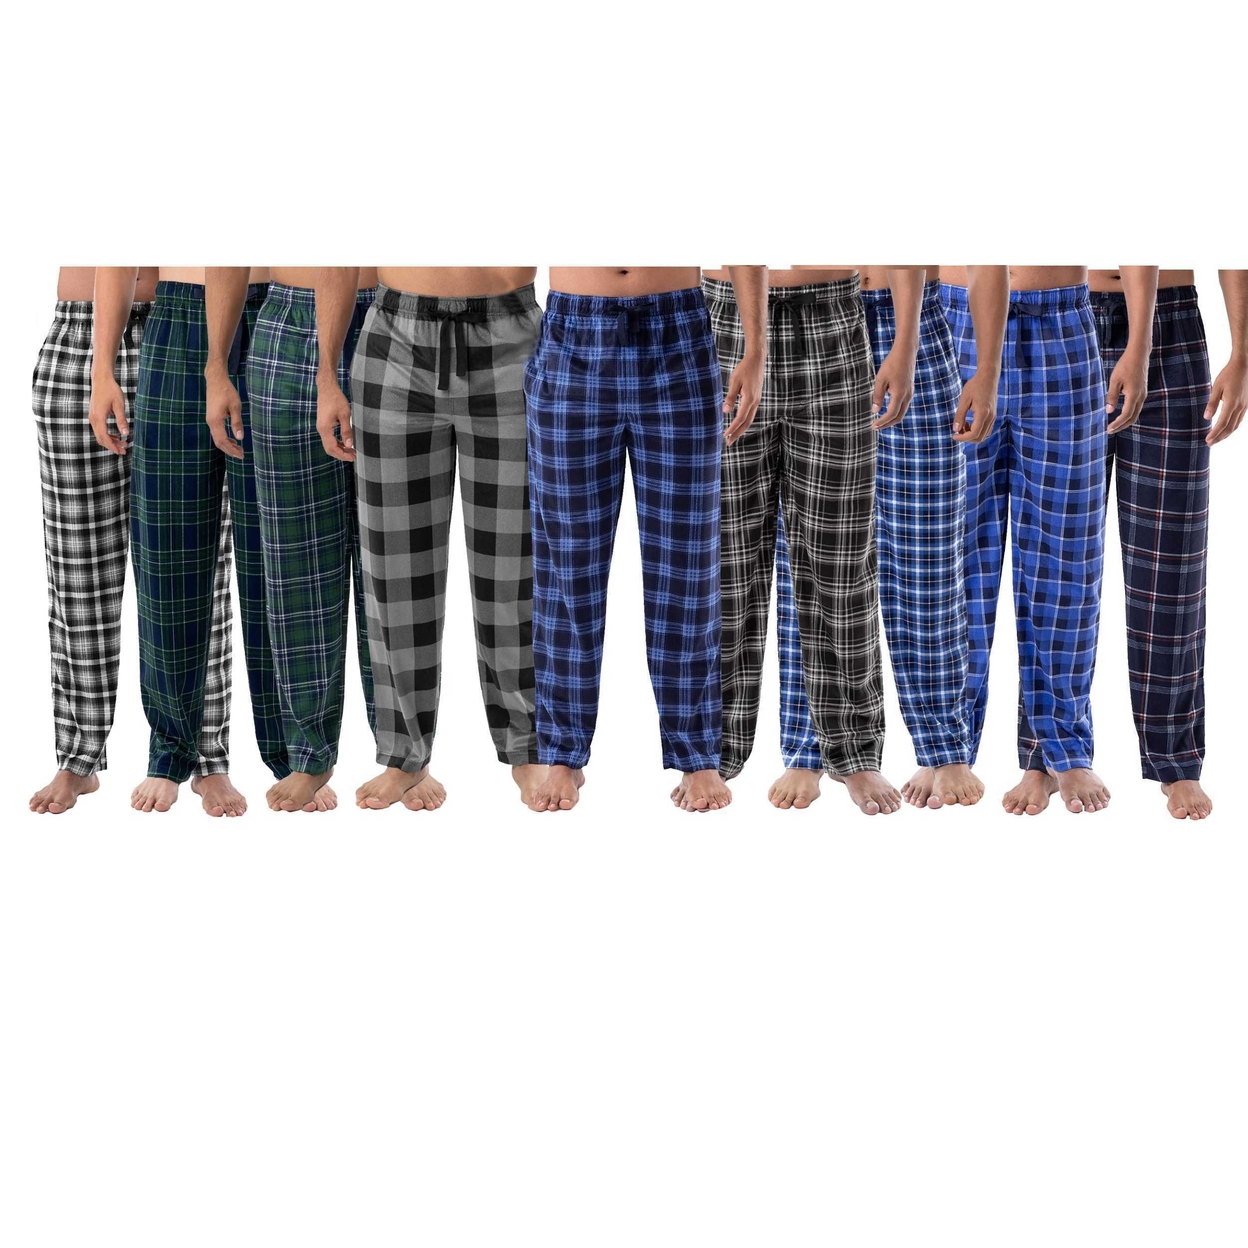 5-Pack: Men's Ultra-Soft Cozy Lounge Sleep Micro Fleece Plaid Pajama Pants - Medium